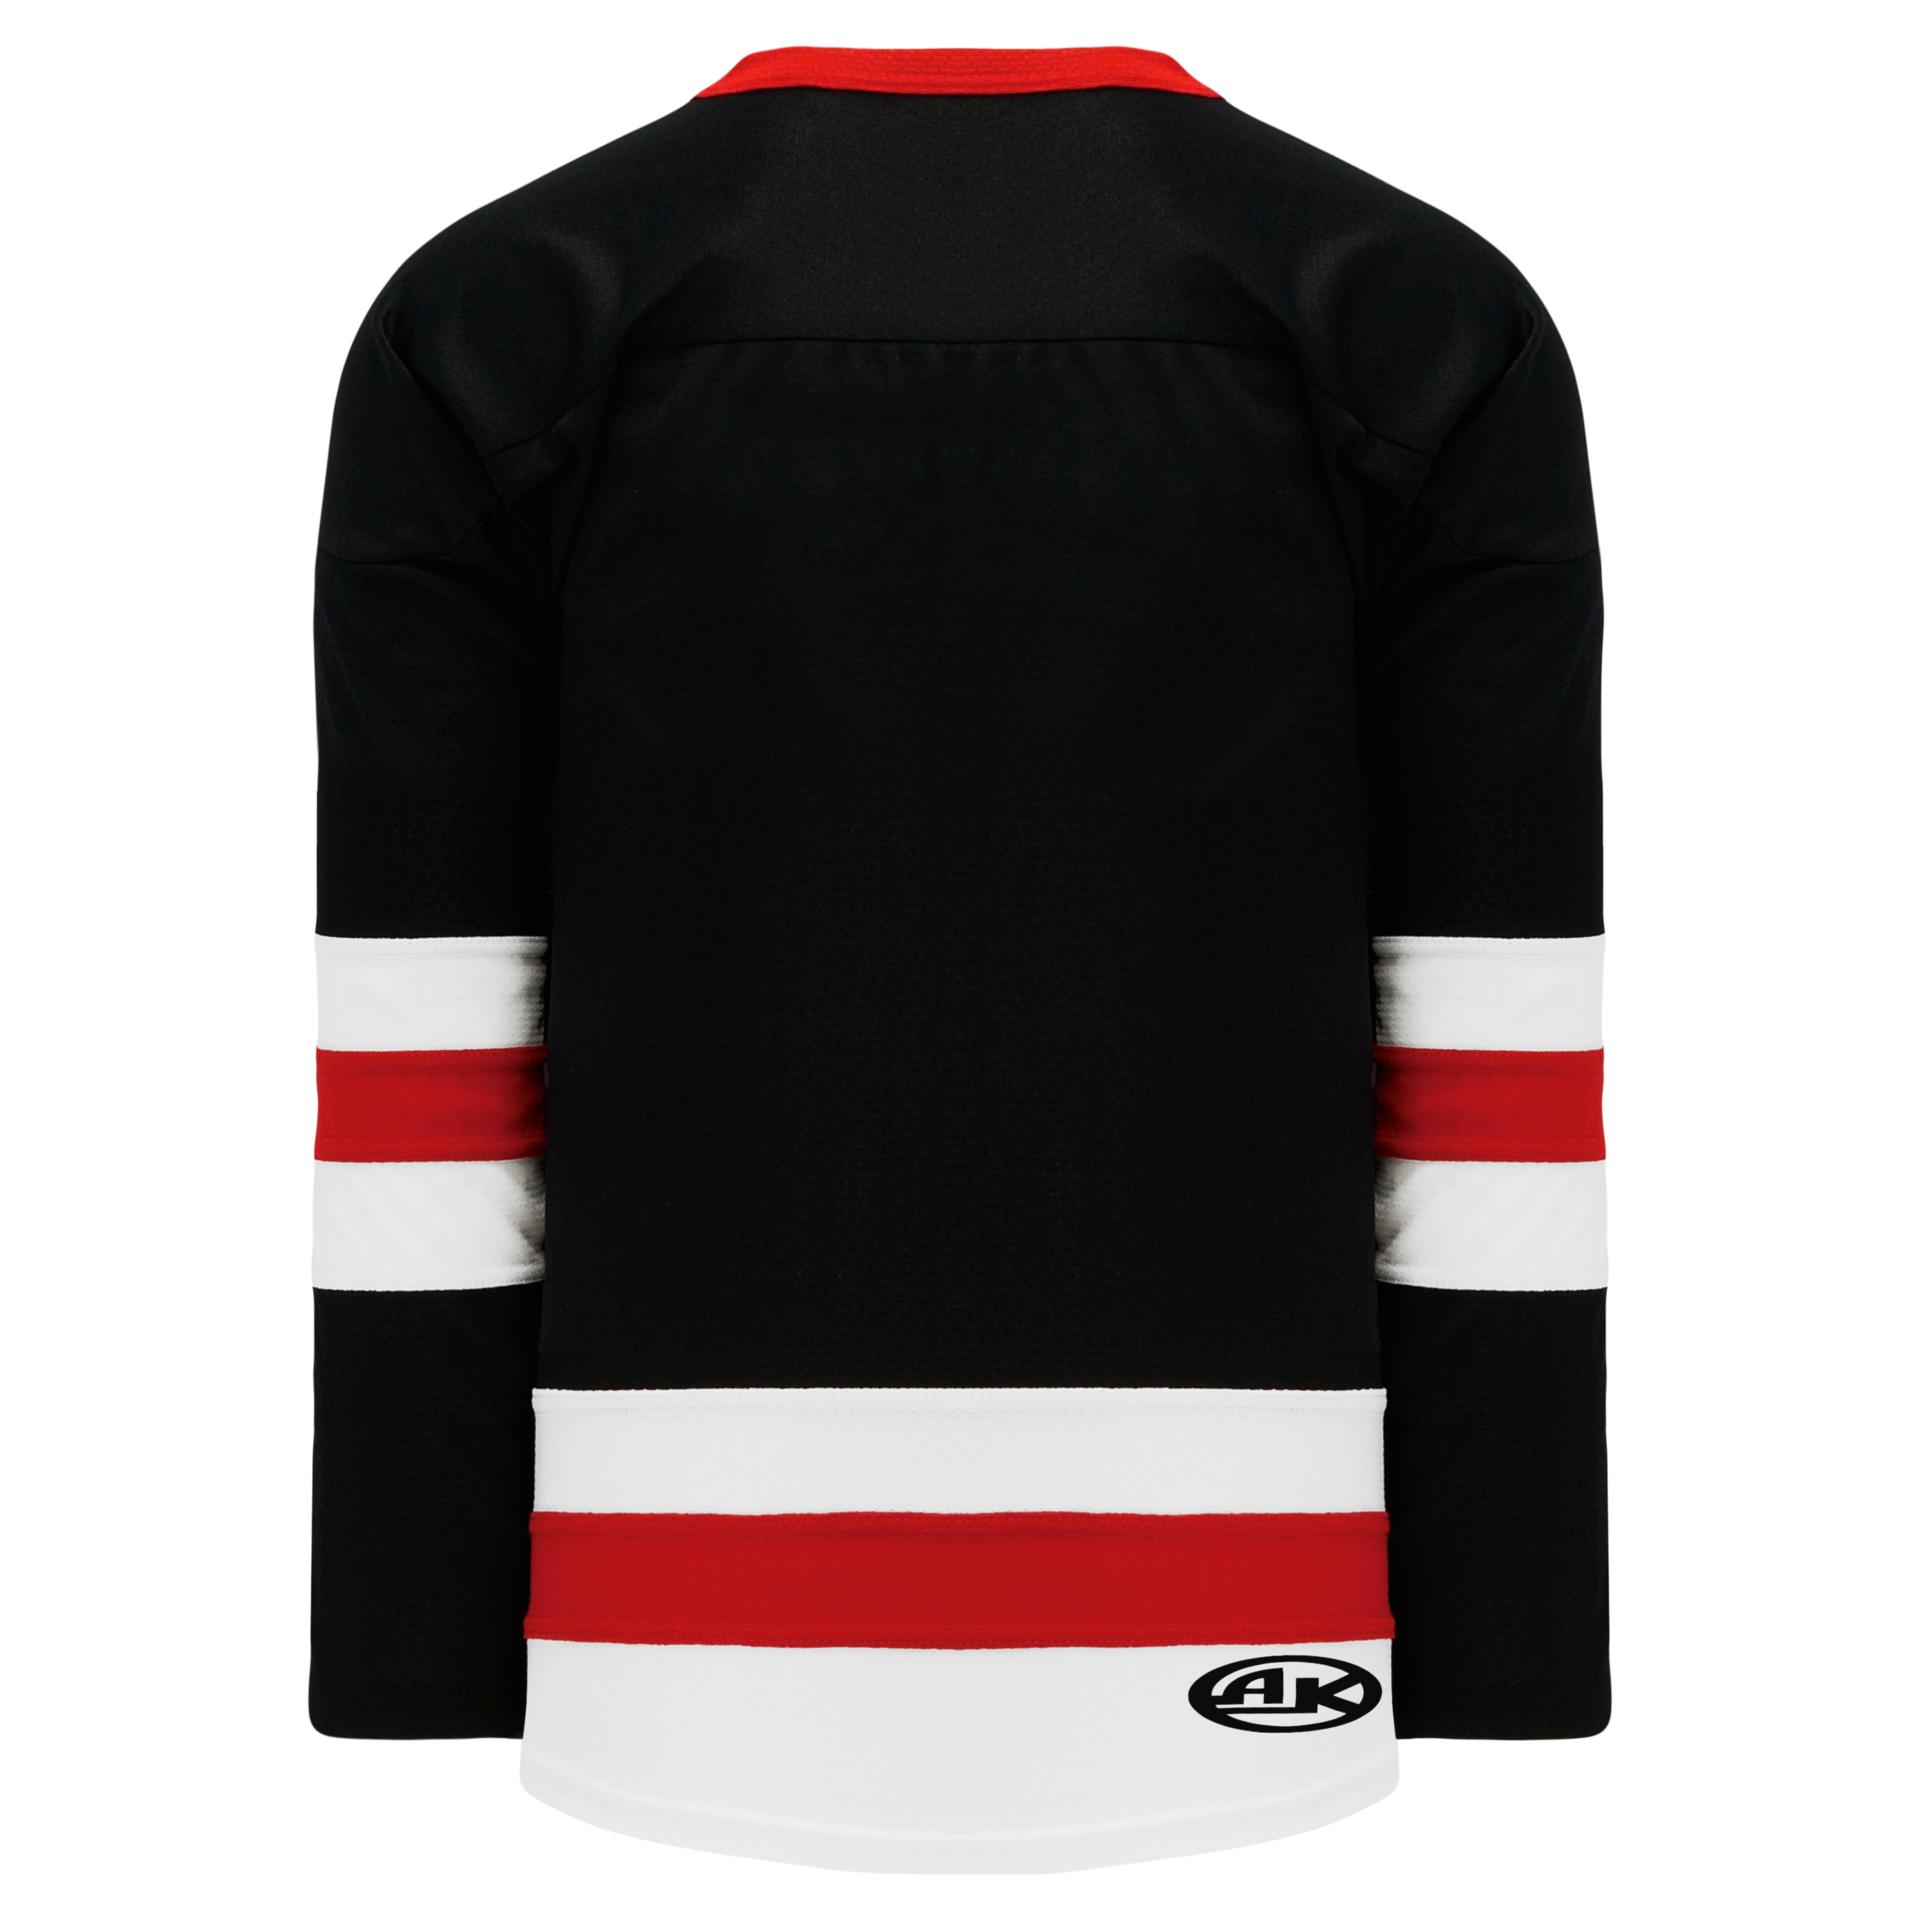 Hockey Club AK Jersey Lace Up Hoodie (SENIOR) - Total Game Plan (TGP) Sports